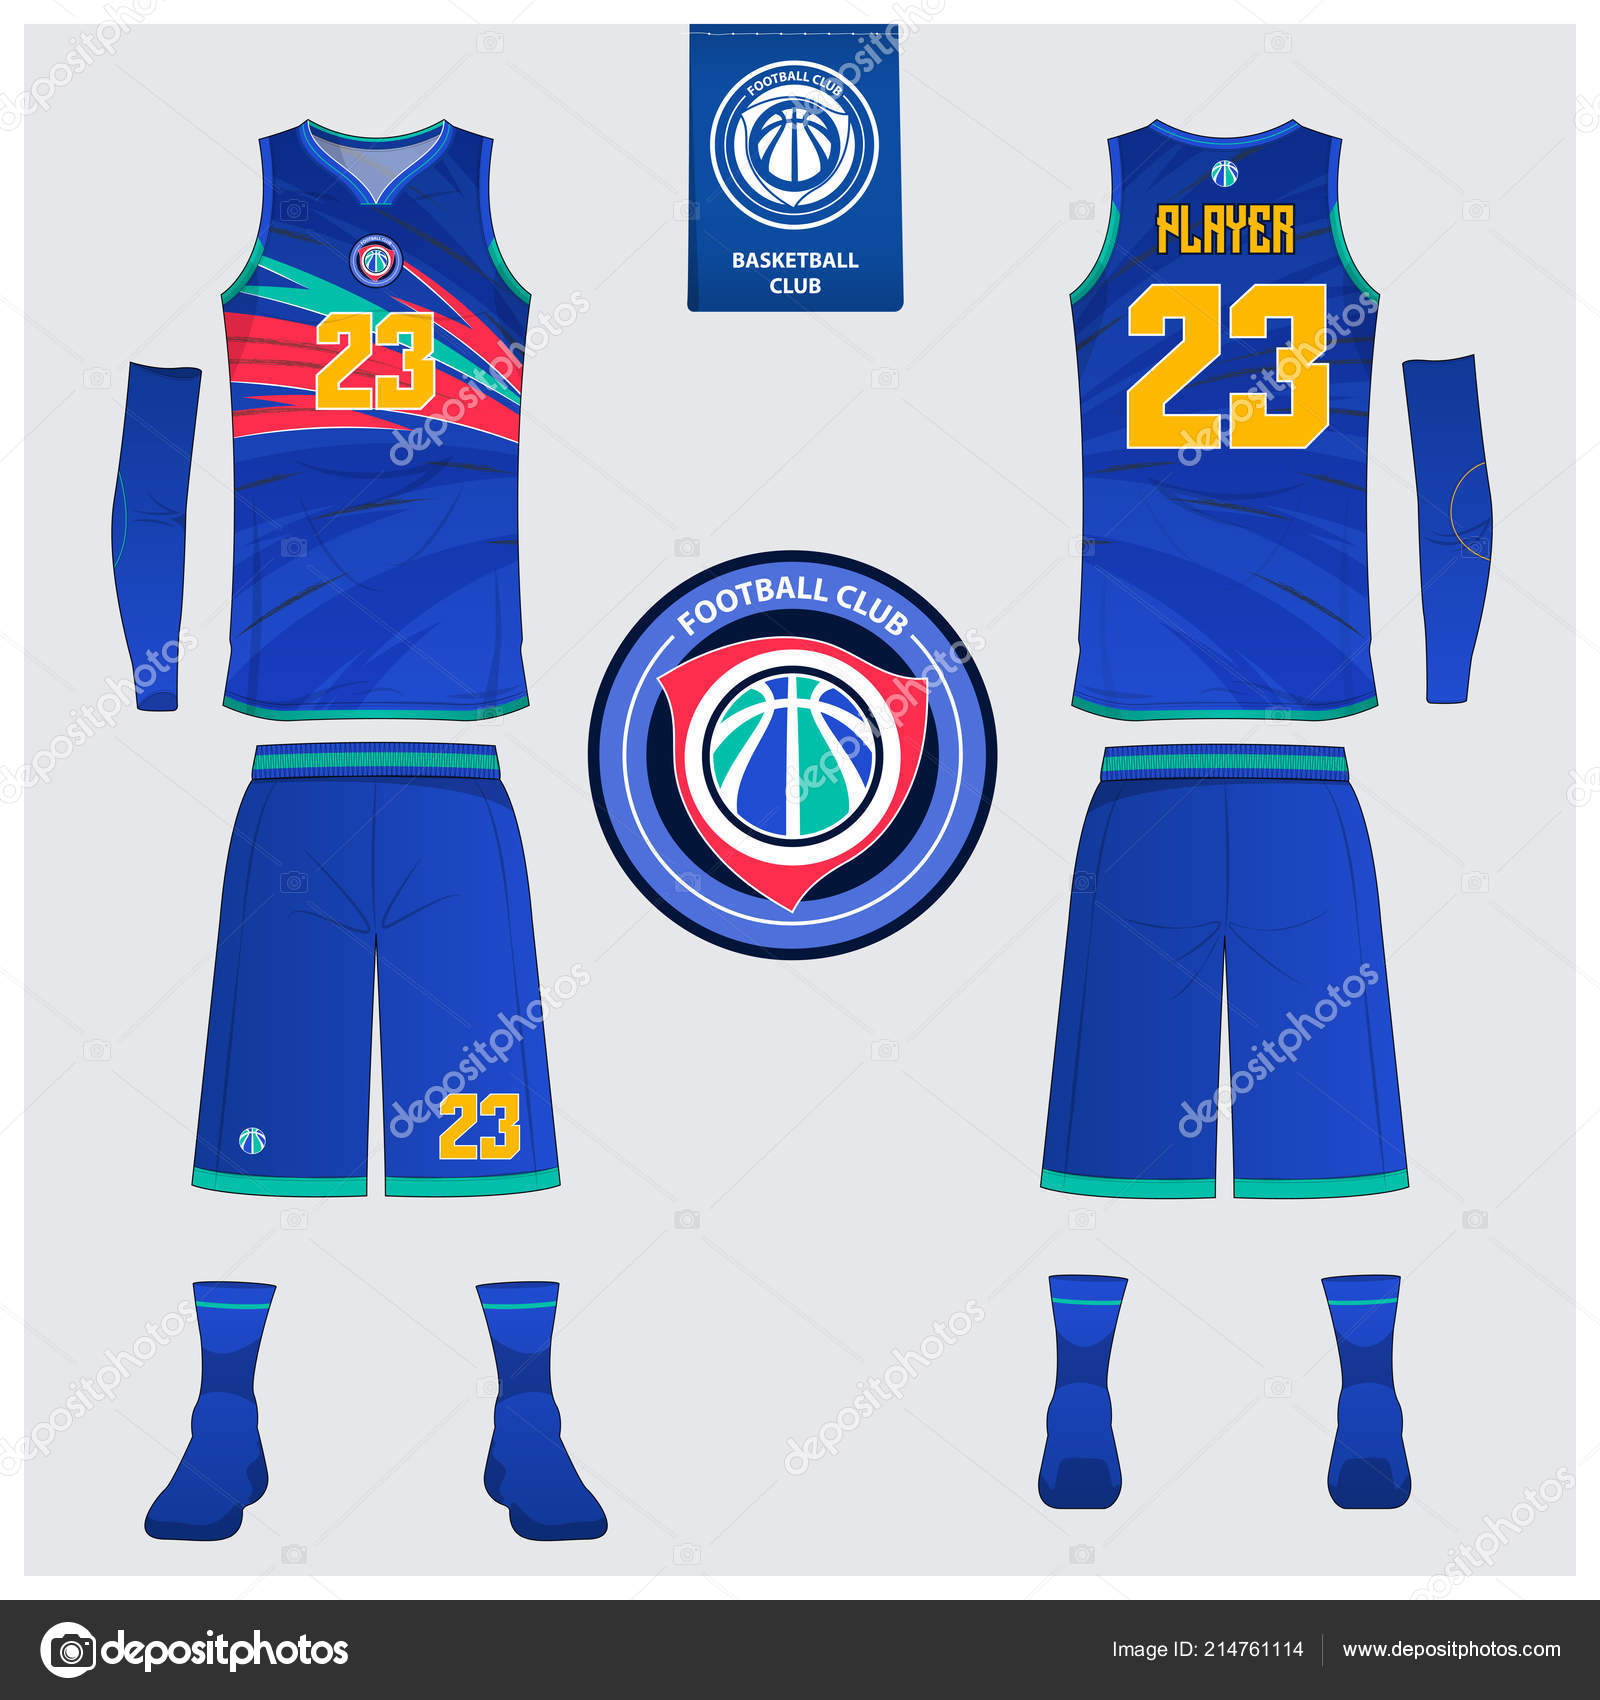 design for jersey uniform